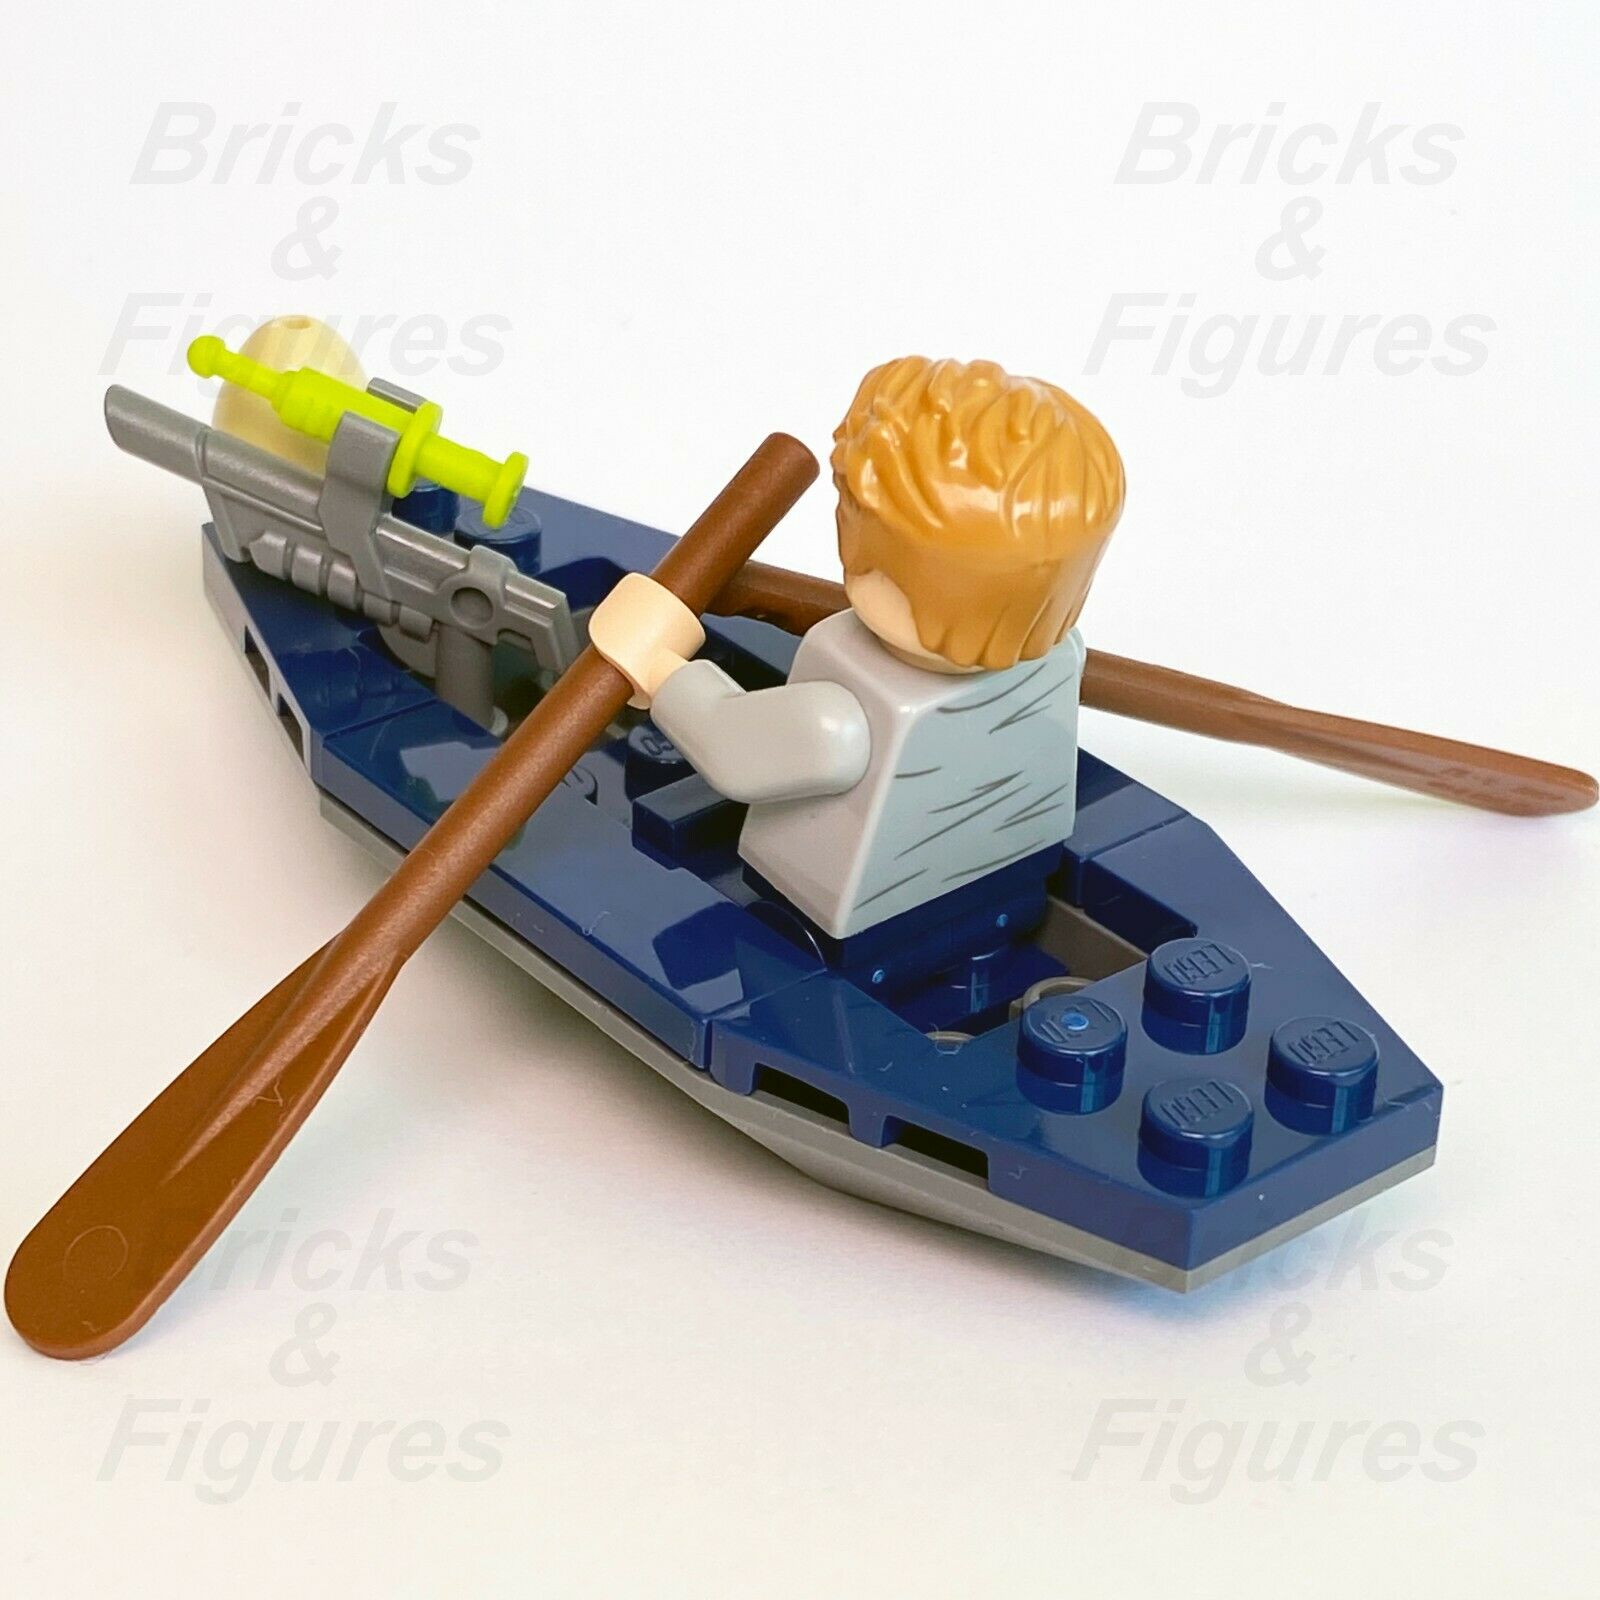 New Jurassic World LEGO Owen Grady with Kayak Foil Pack Set Minifigure 122007 - Bricks & Figures